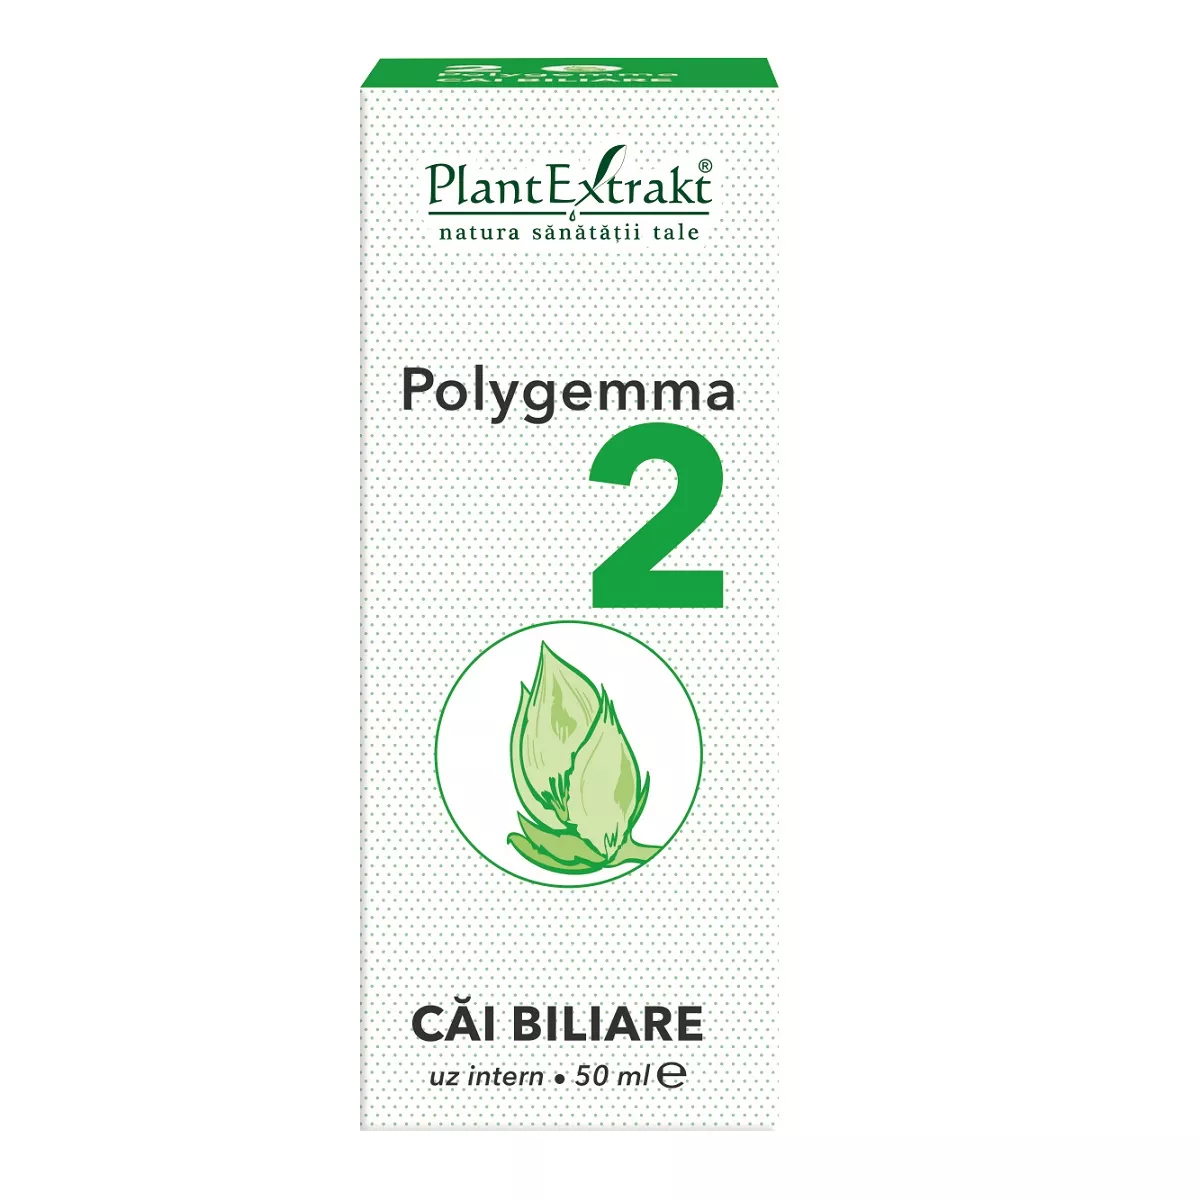 Polygemma 2 Cai biliare, 50 ml, Plantextrakt, [],remediumfarm.ro